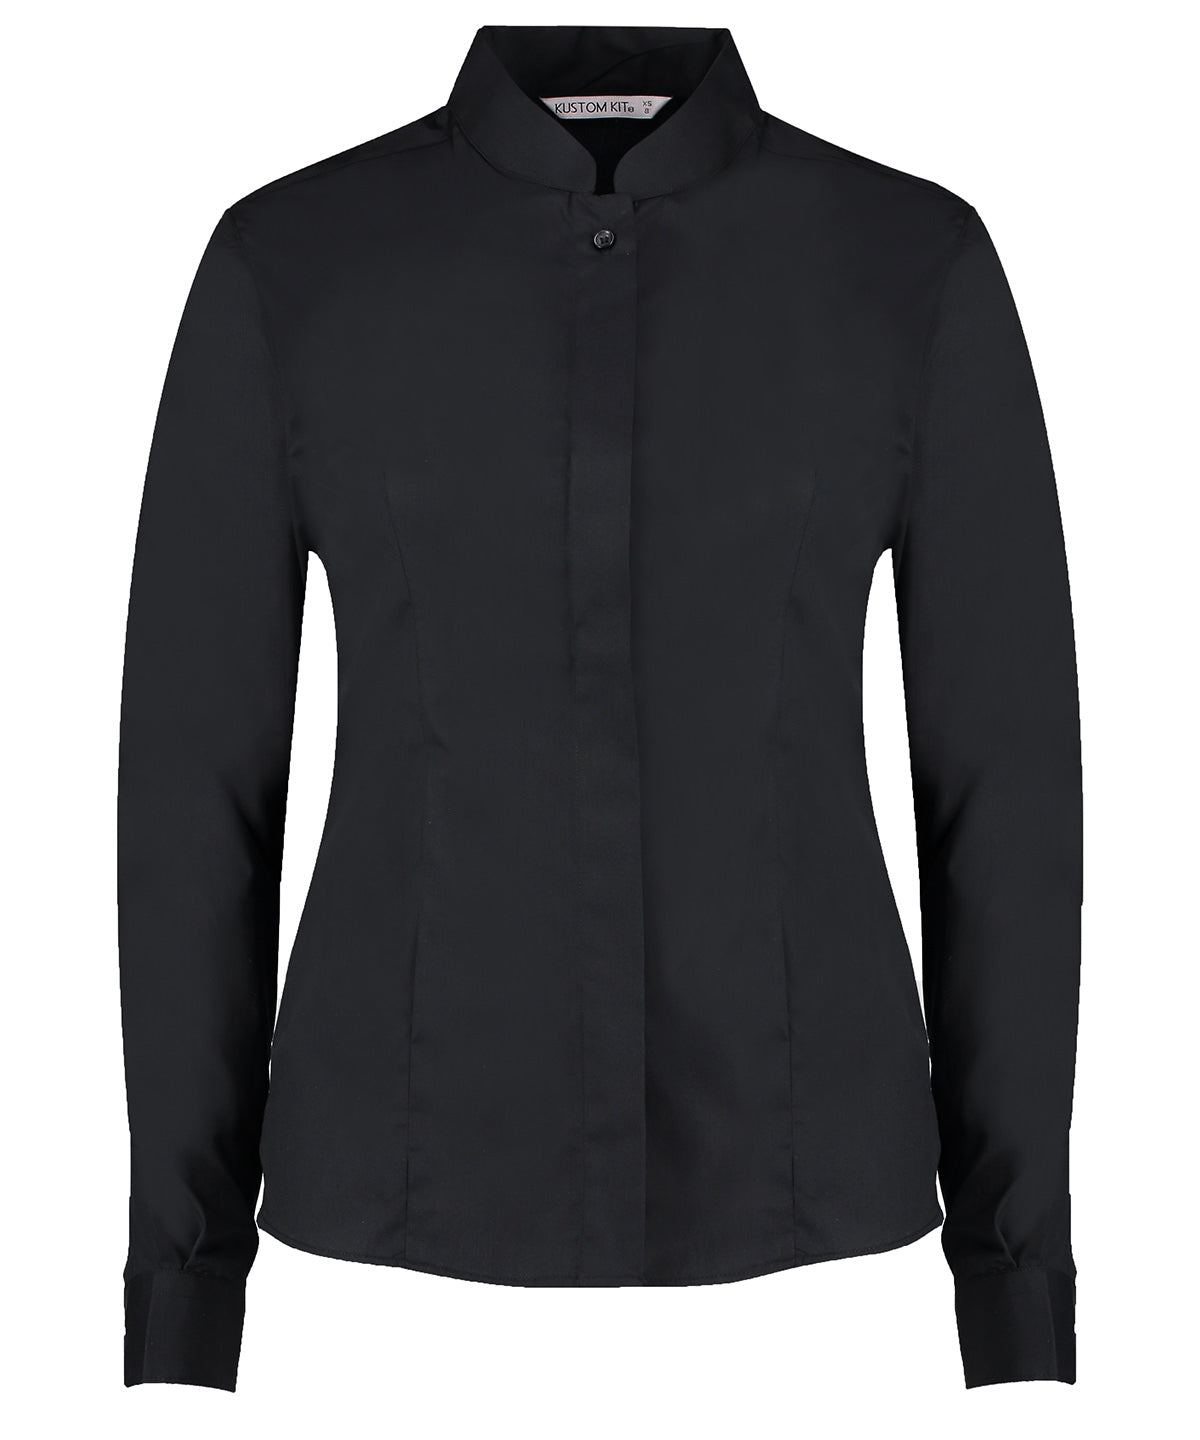 Bolir - Women's Mandarin Collar Shirt Long-sleeved (tailored Fit)